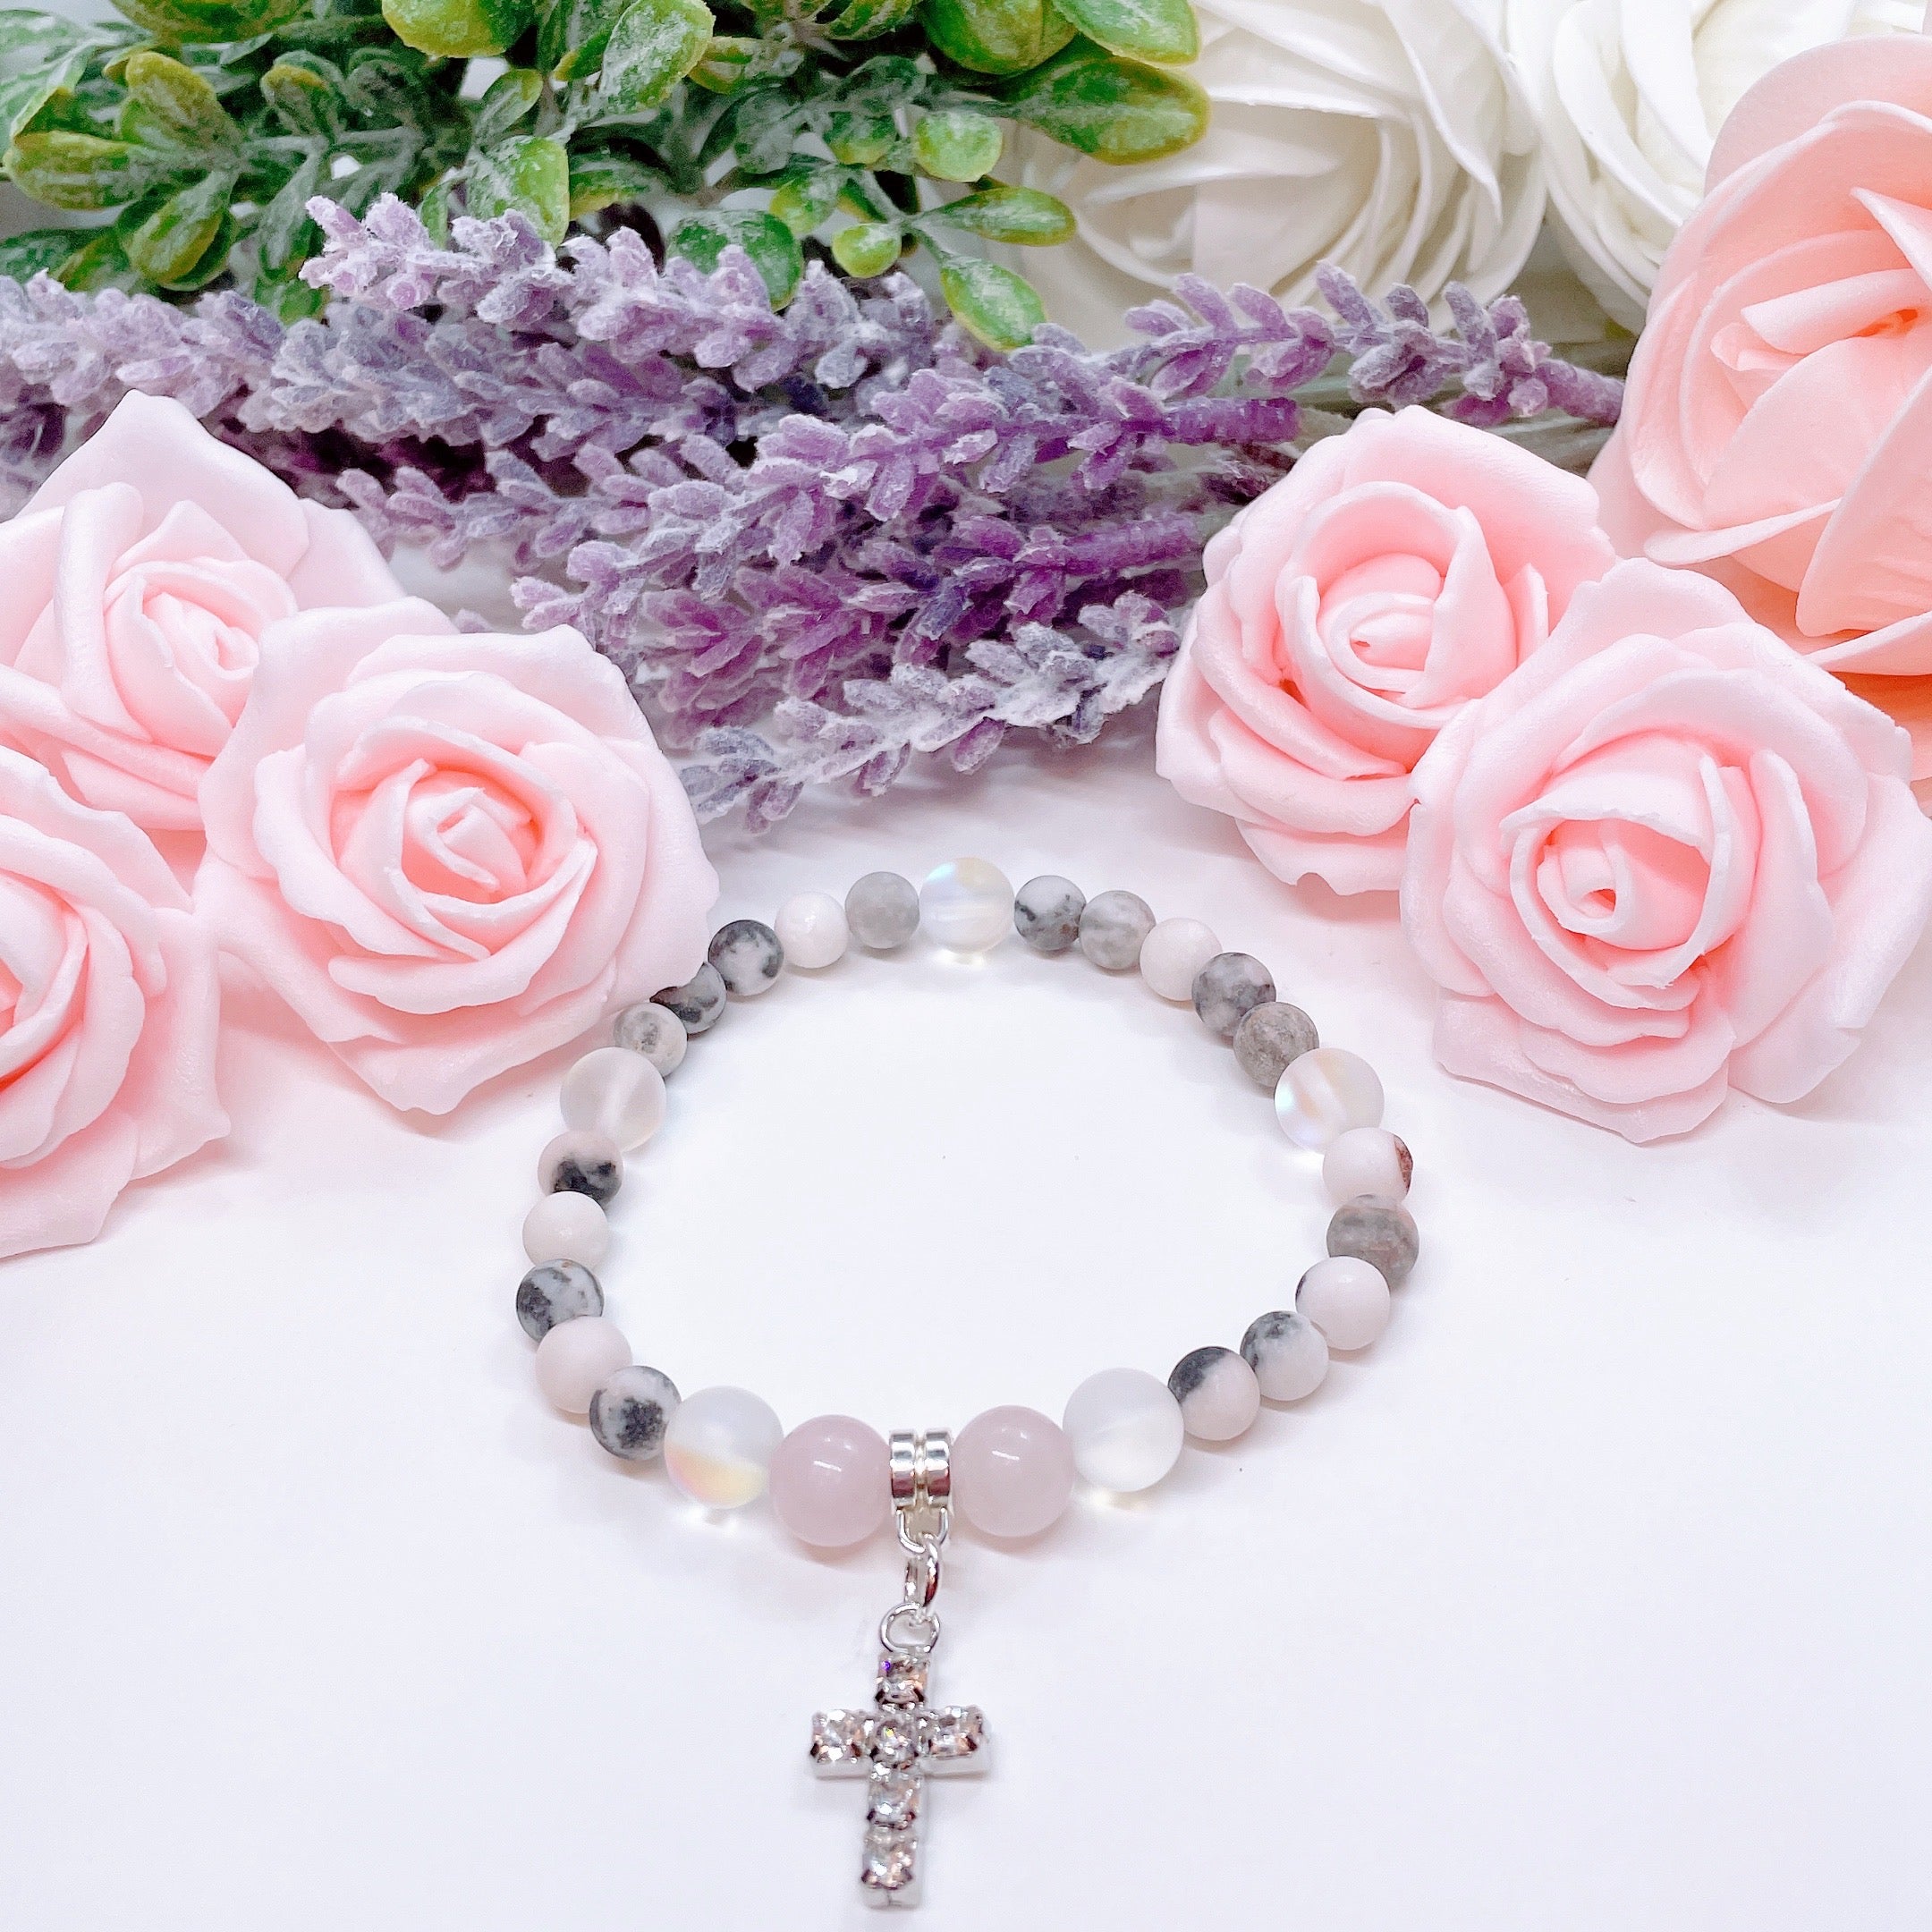 Rhinestone Cross Companion Charm Bracelet Rose Quartz